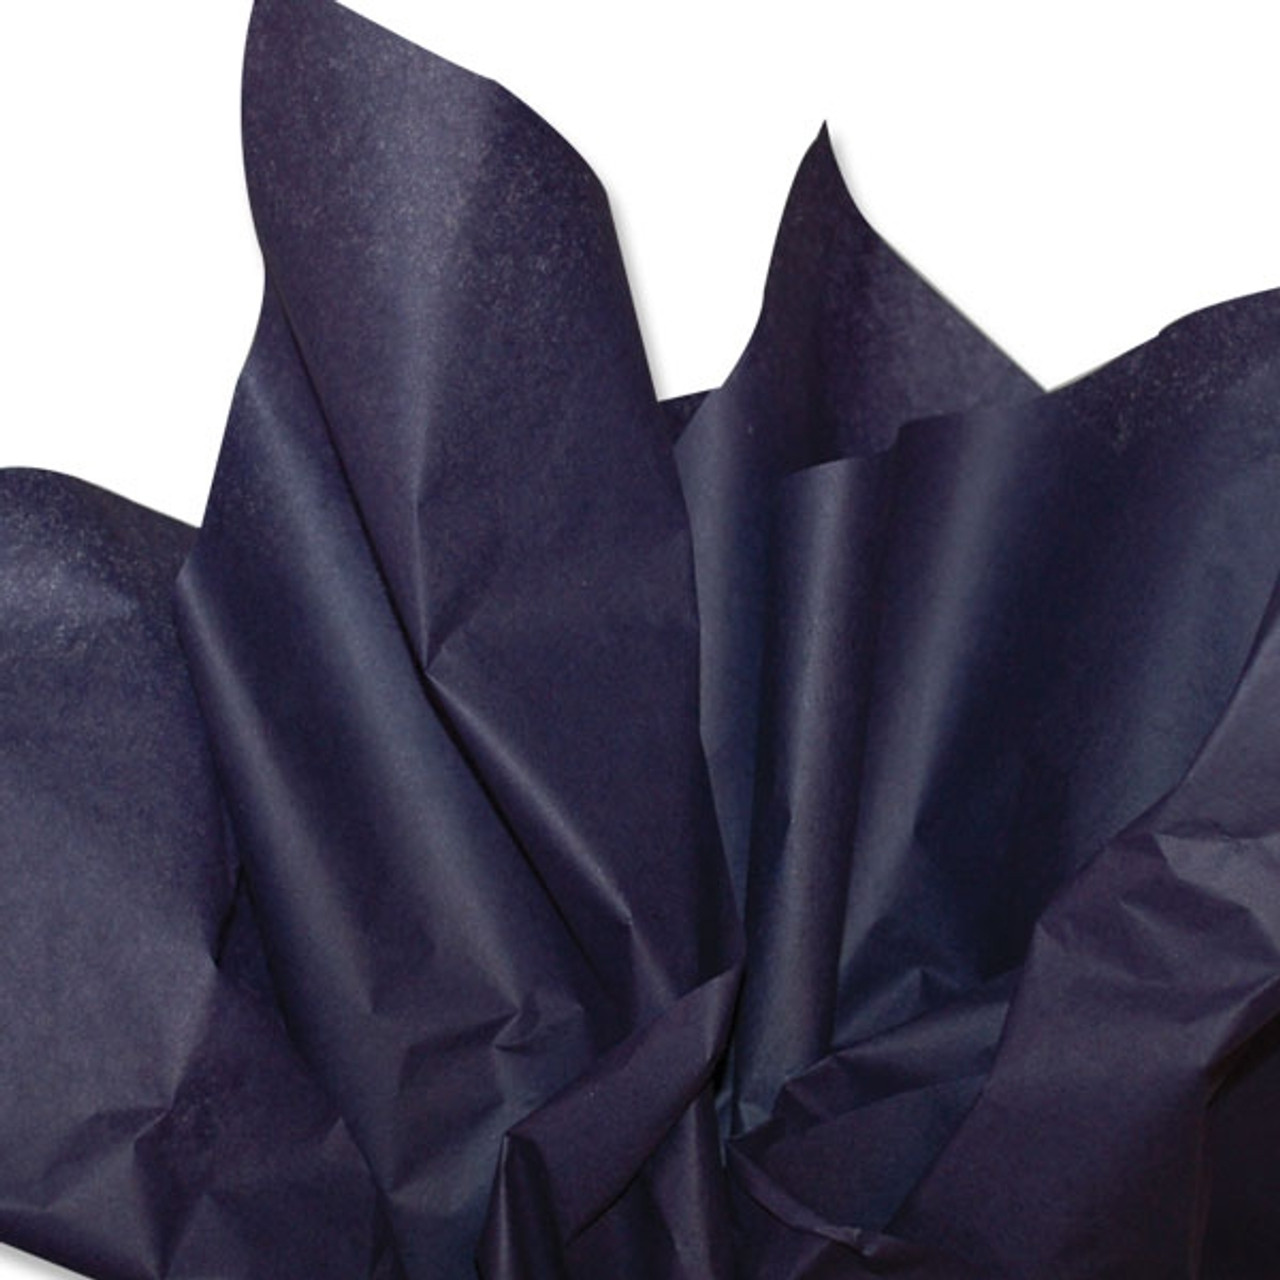 Navy Blue Tissue Paper - 20 x 30 - 480 / Pack